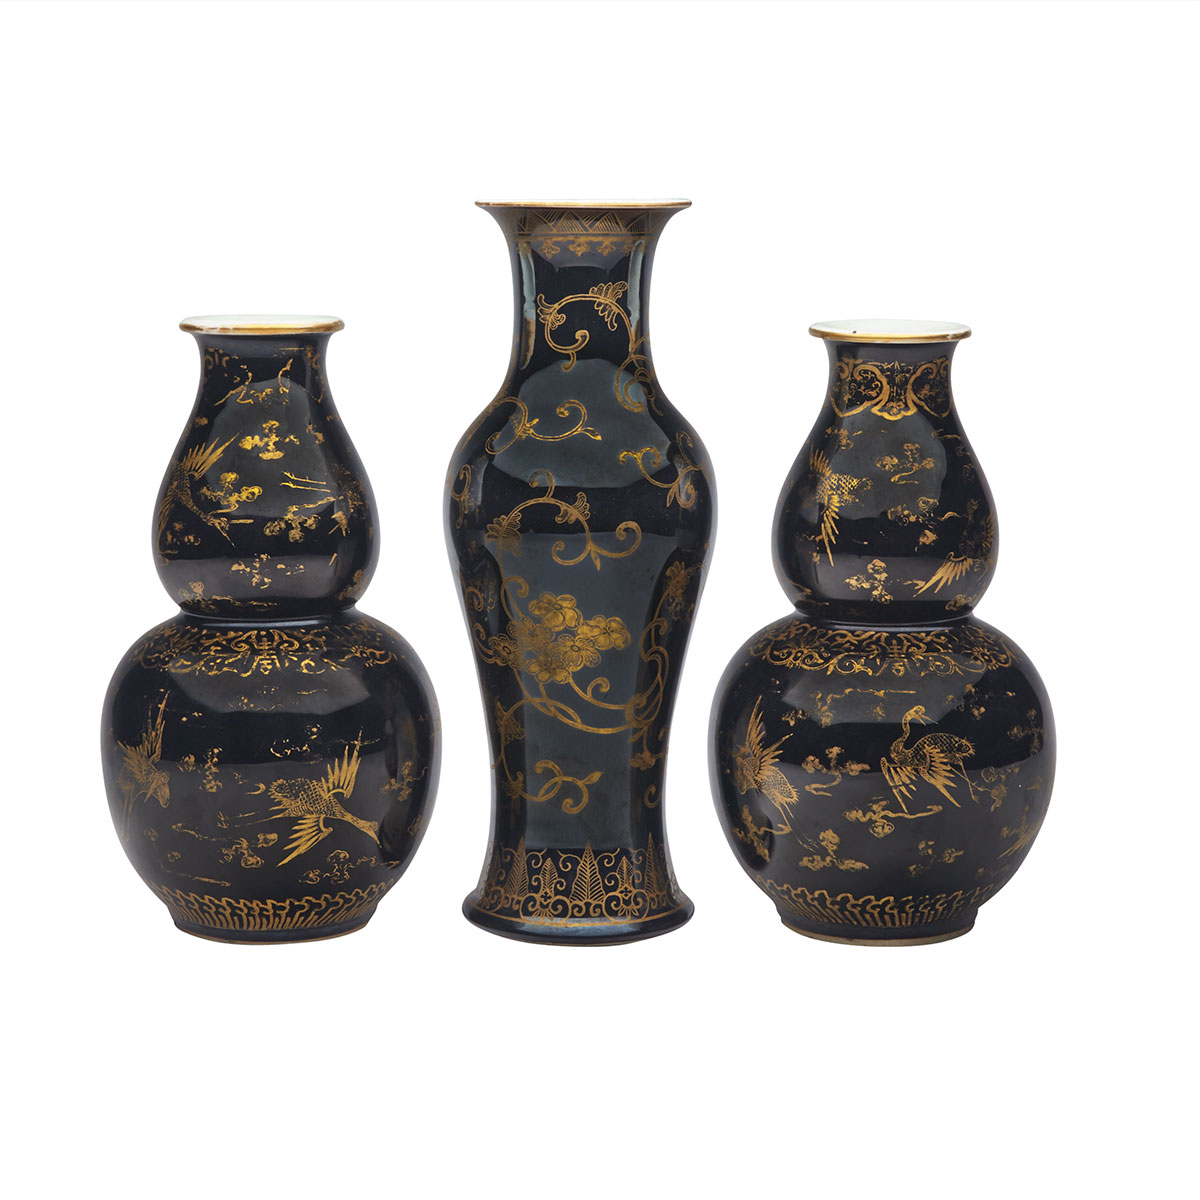 Three Mirror Black and Gilt Painted Vases, Kangxi Mark, Late 19th Century